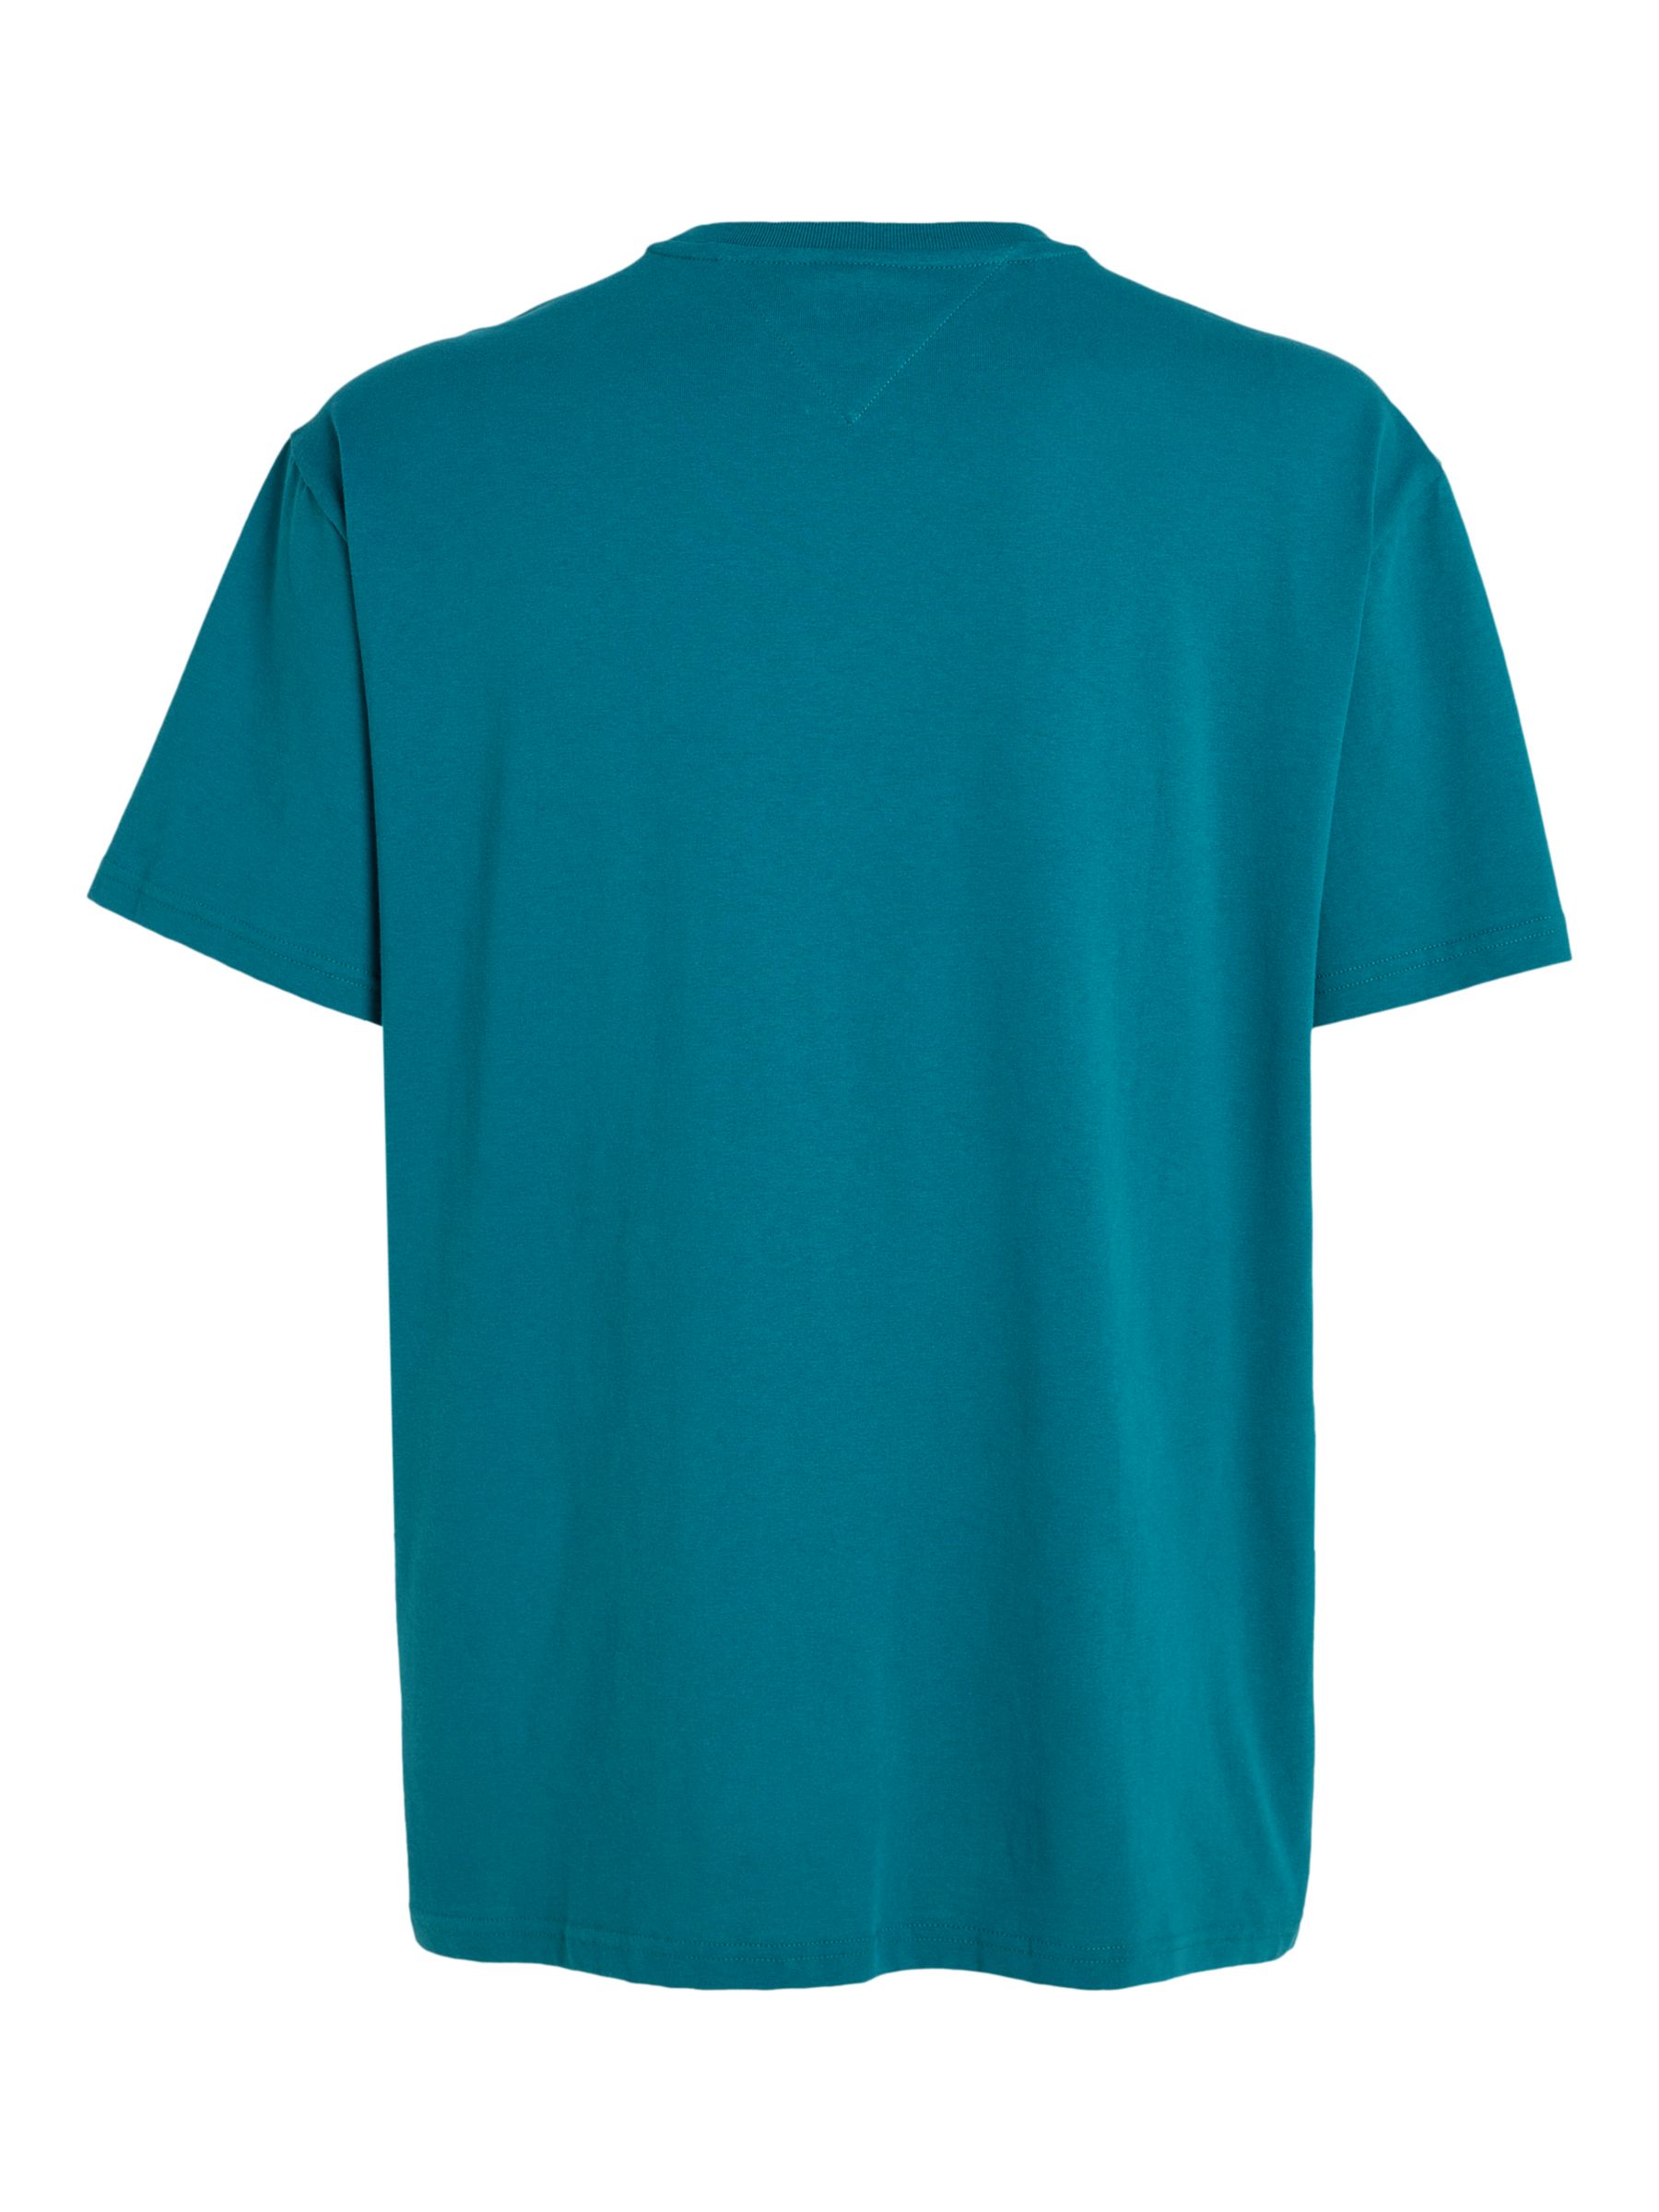 Tommy Jeans Logo Pop Colour T-Shirt, Timeless Teal, M